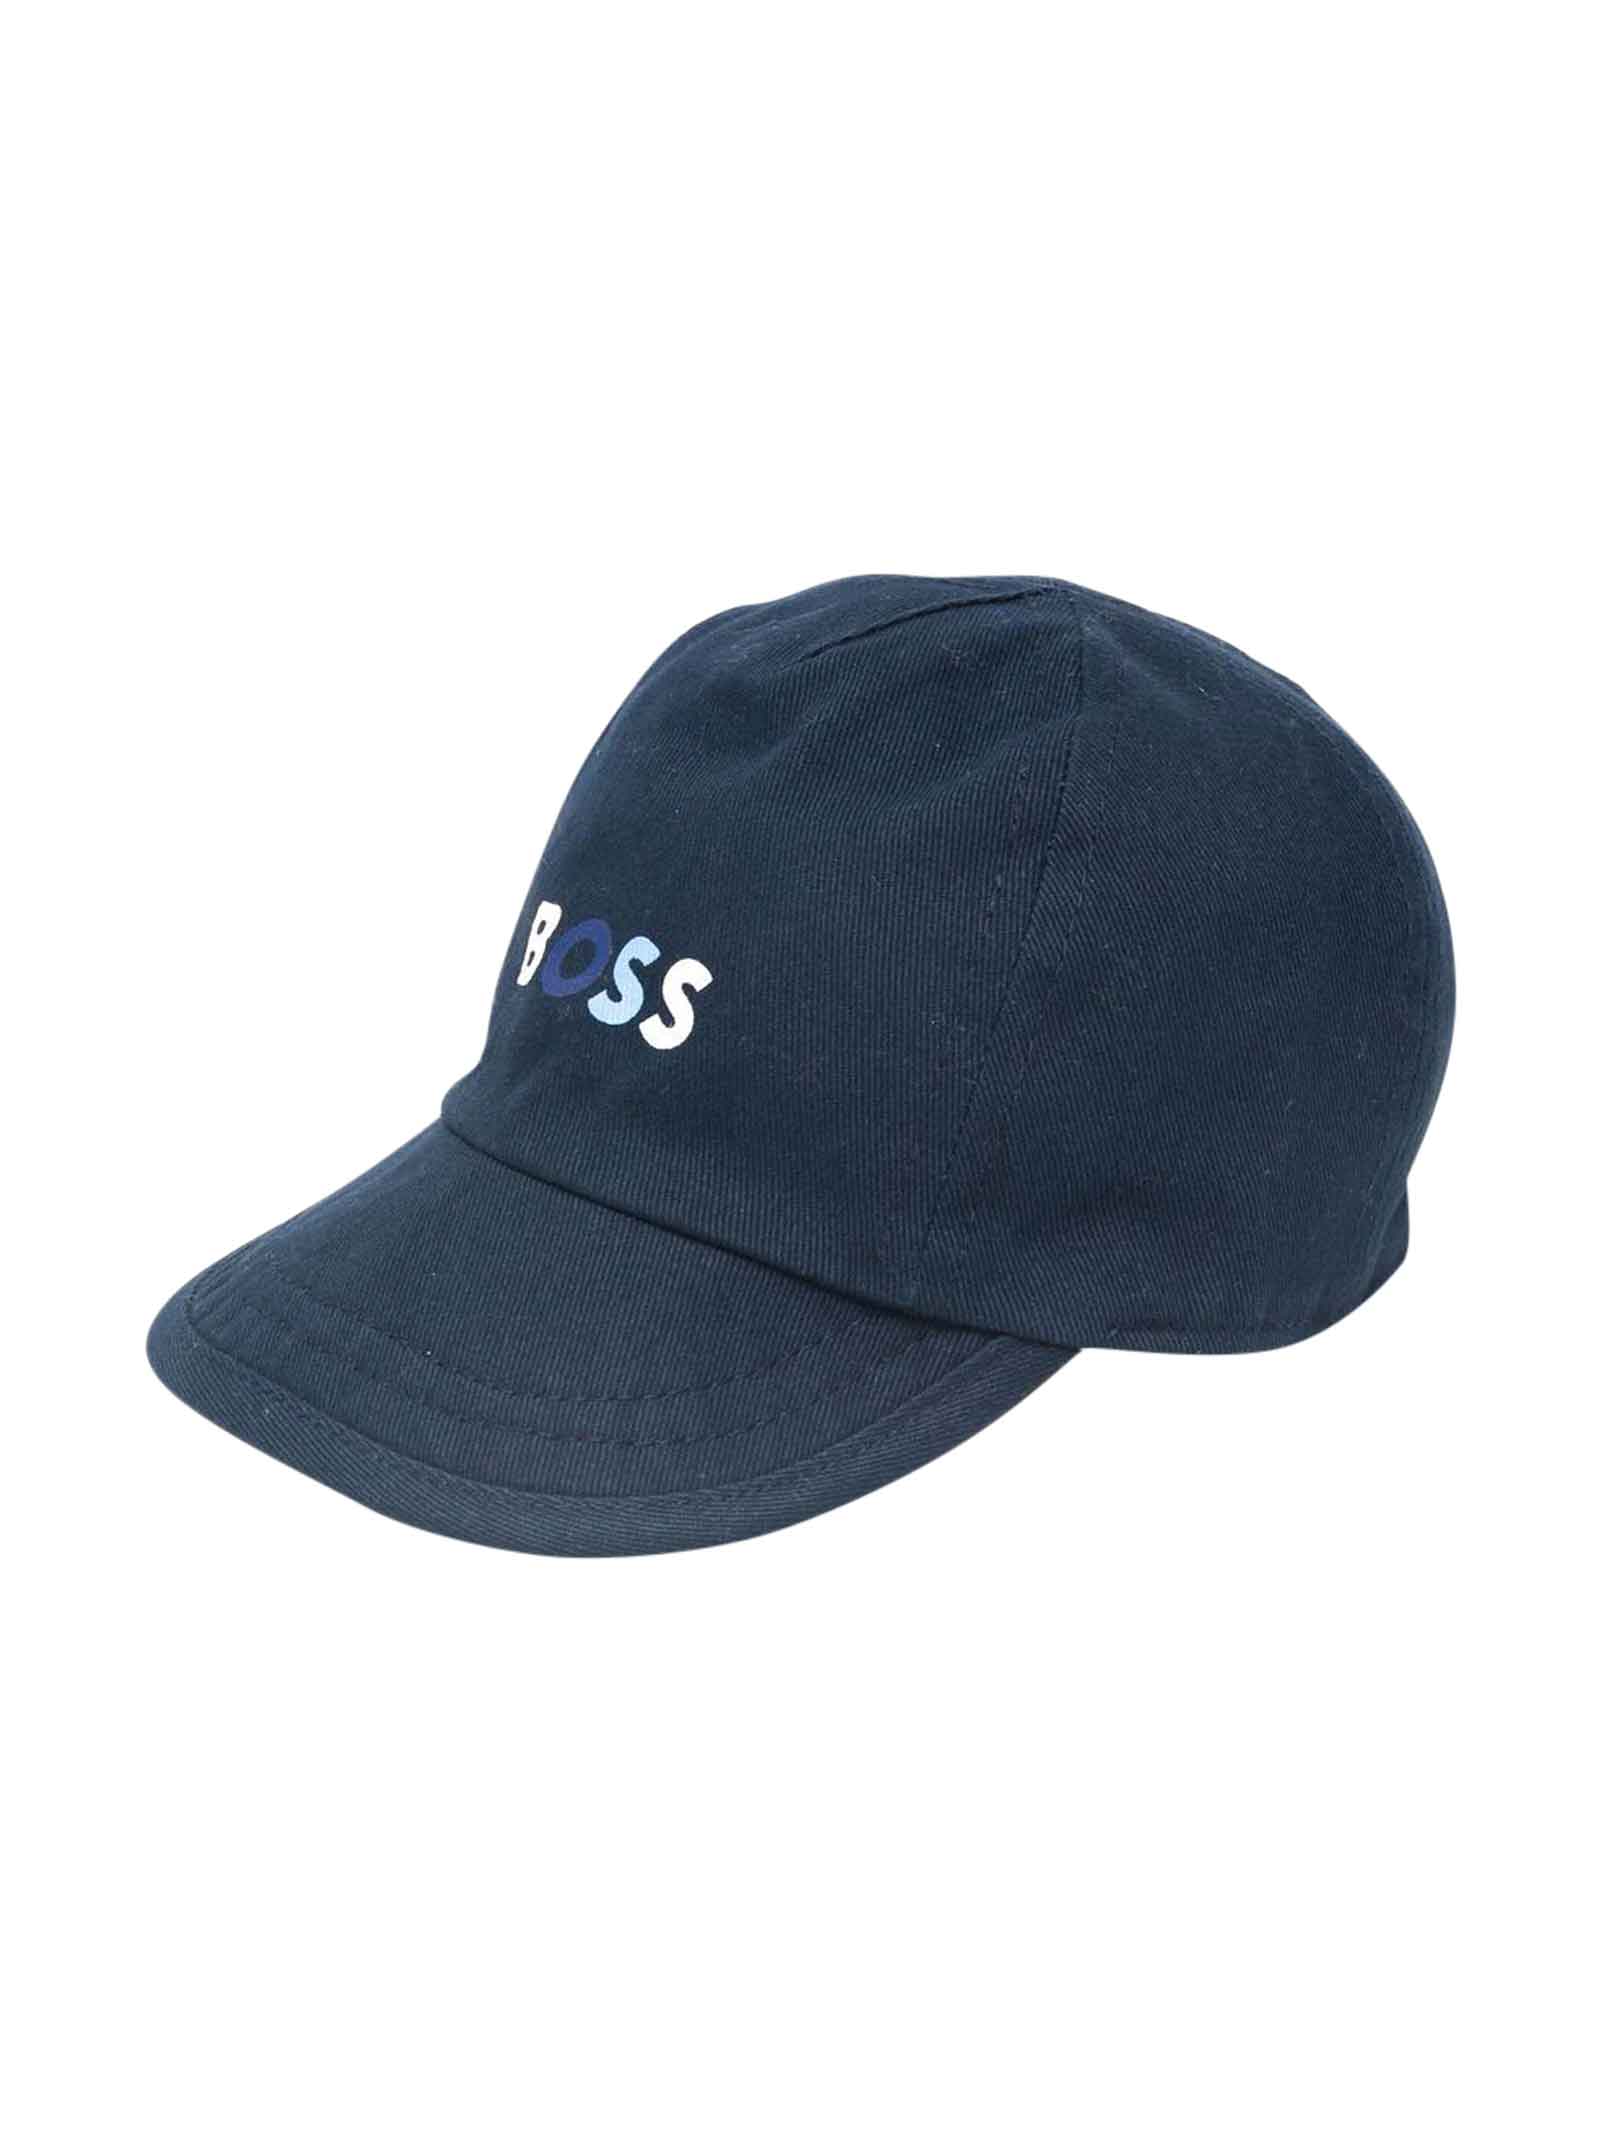 Hugo Boss Blue Boy Hat